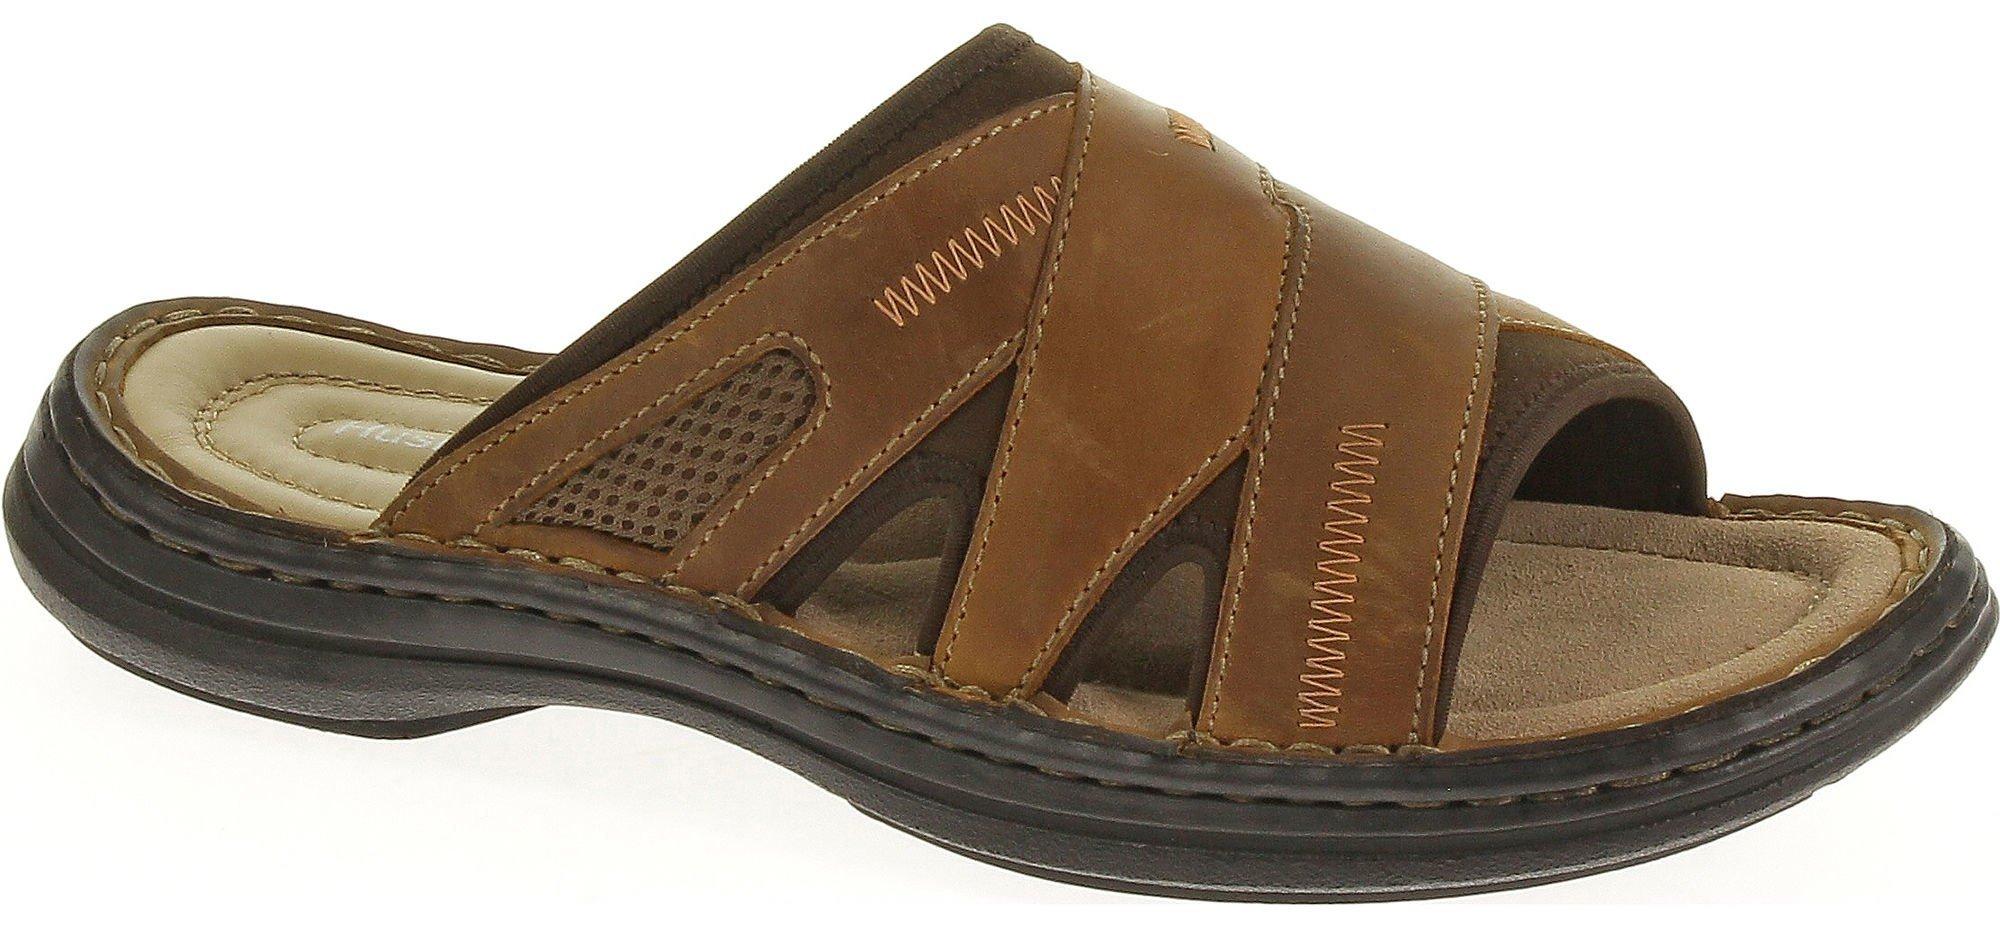 Mens Relief Slide Sandals